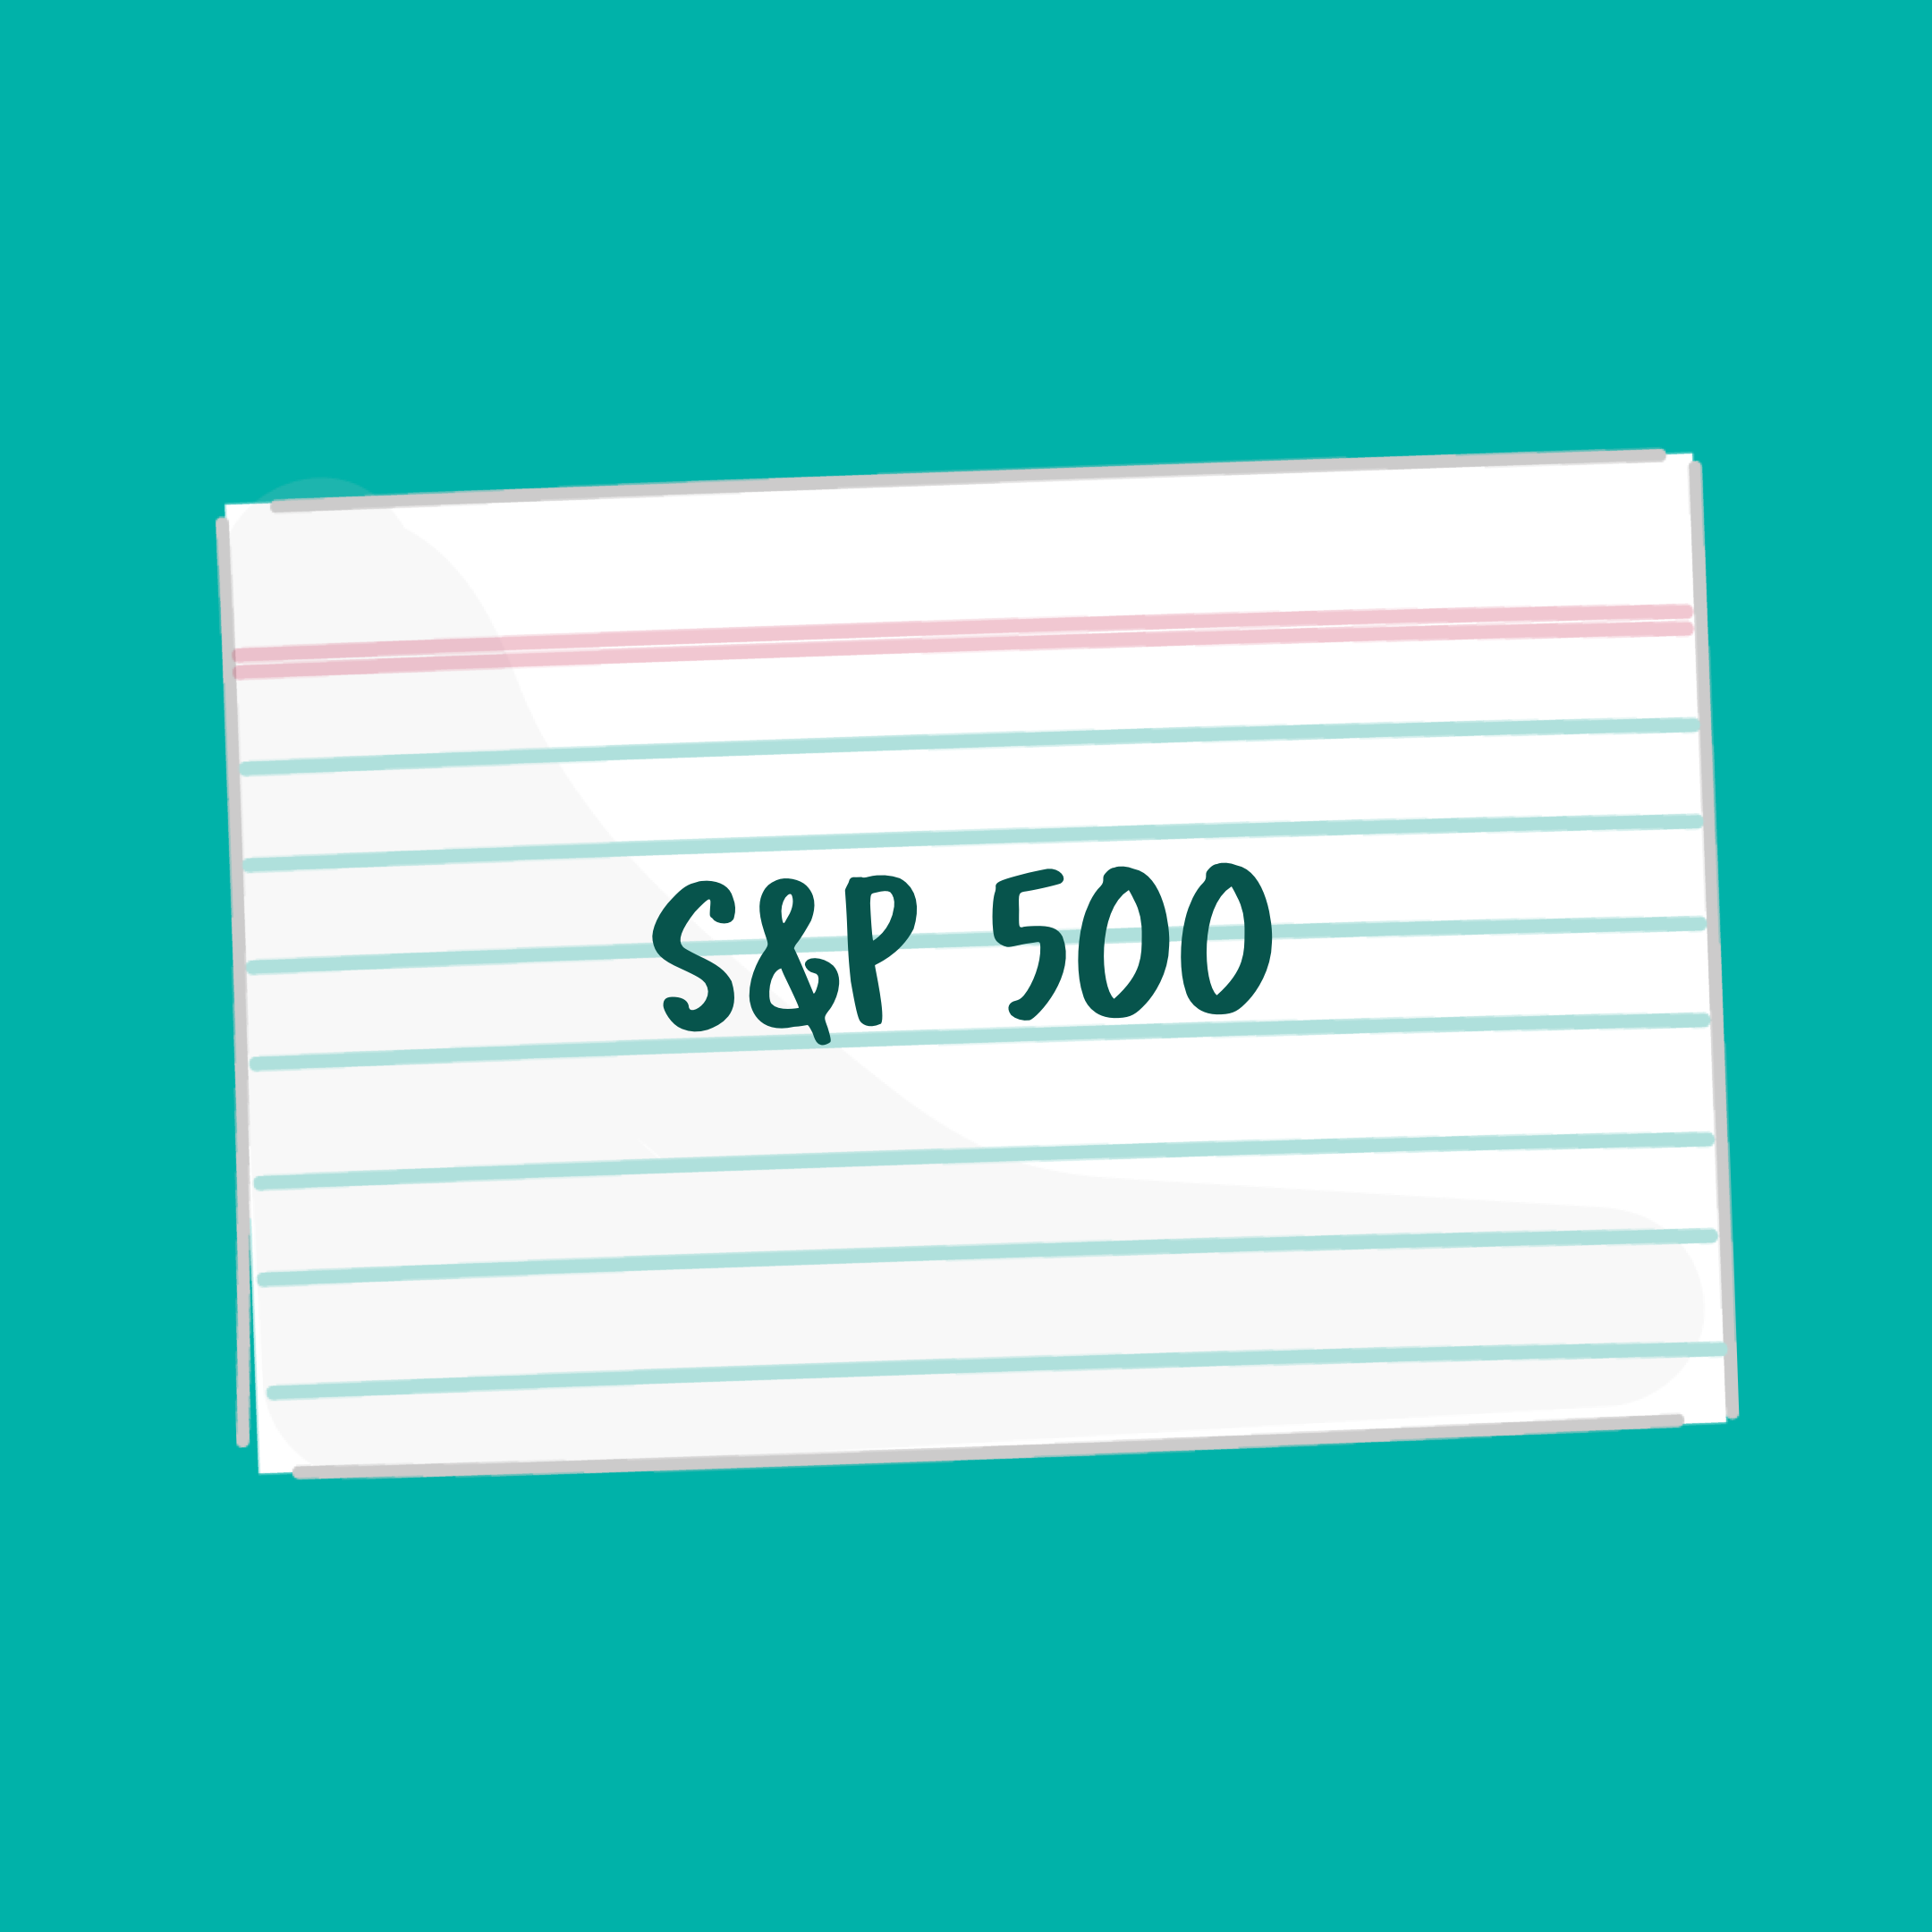 S&P 500 card